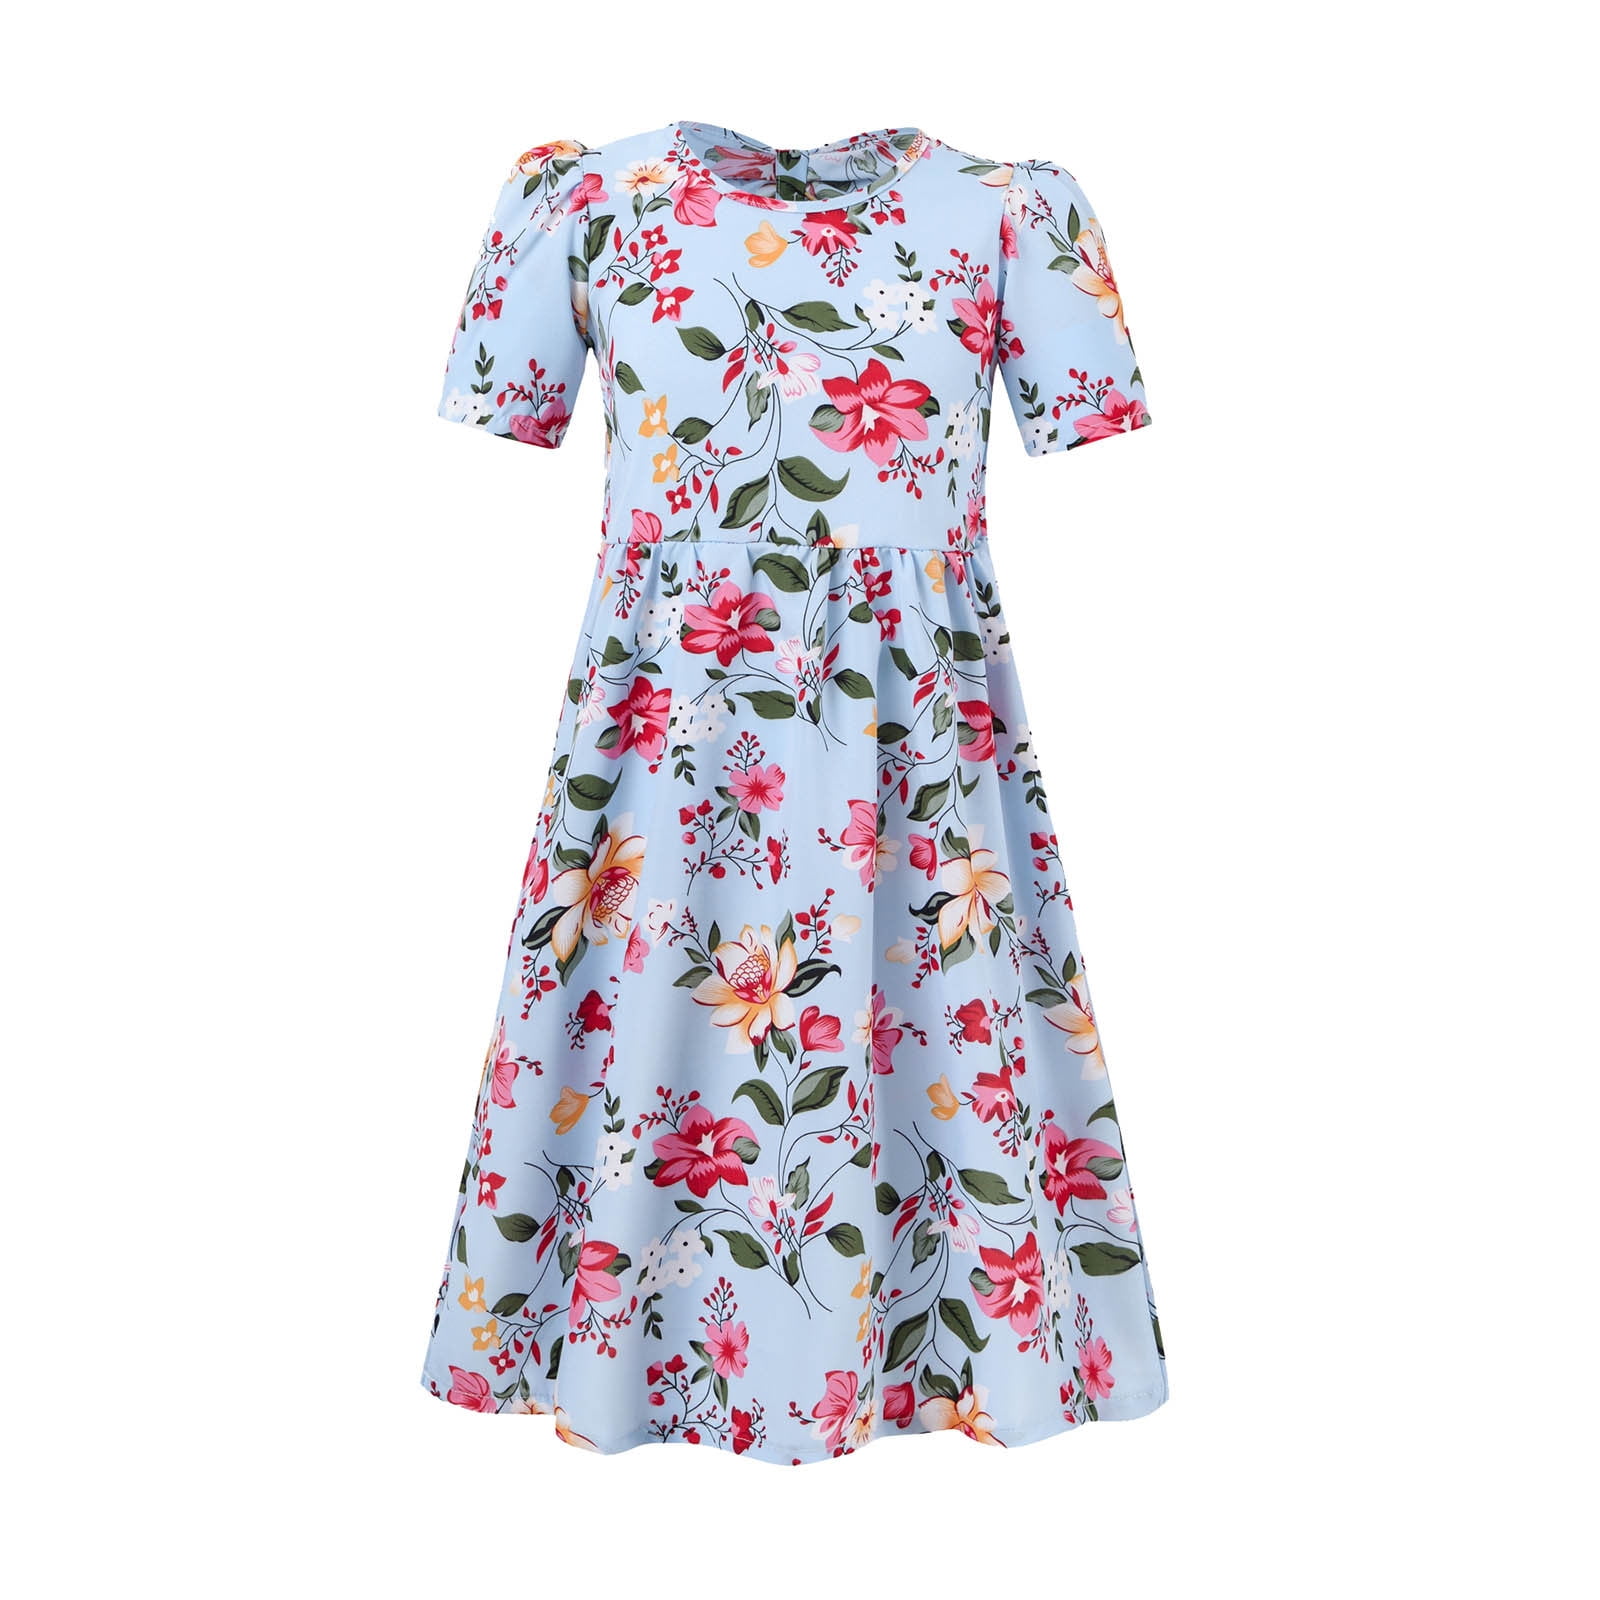 EHQJNJ Bow Dress Girl's Casual Dress Summer Scoop Neck Short Sleeves ...